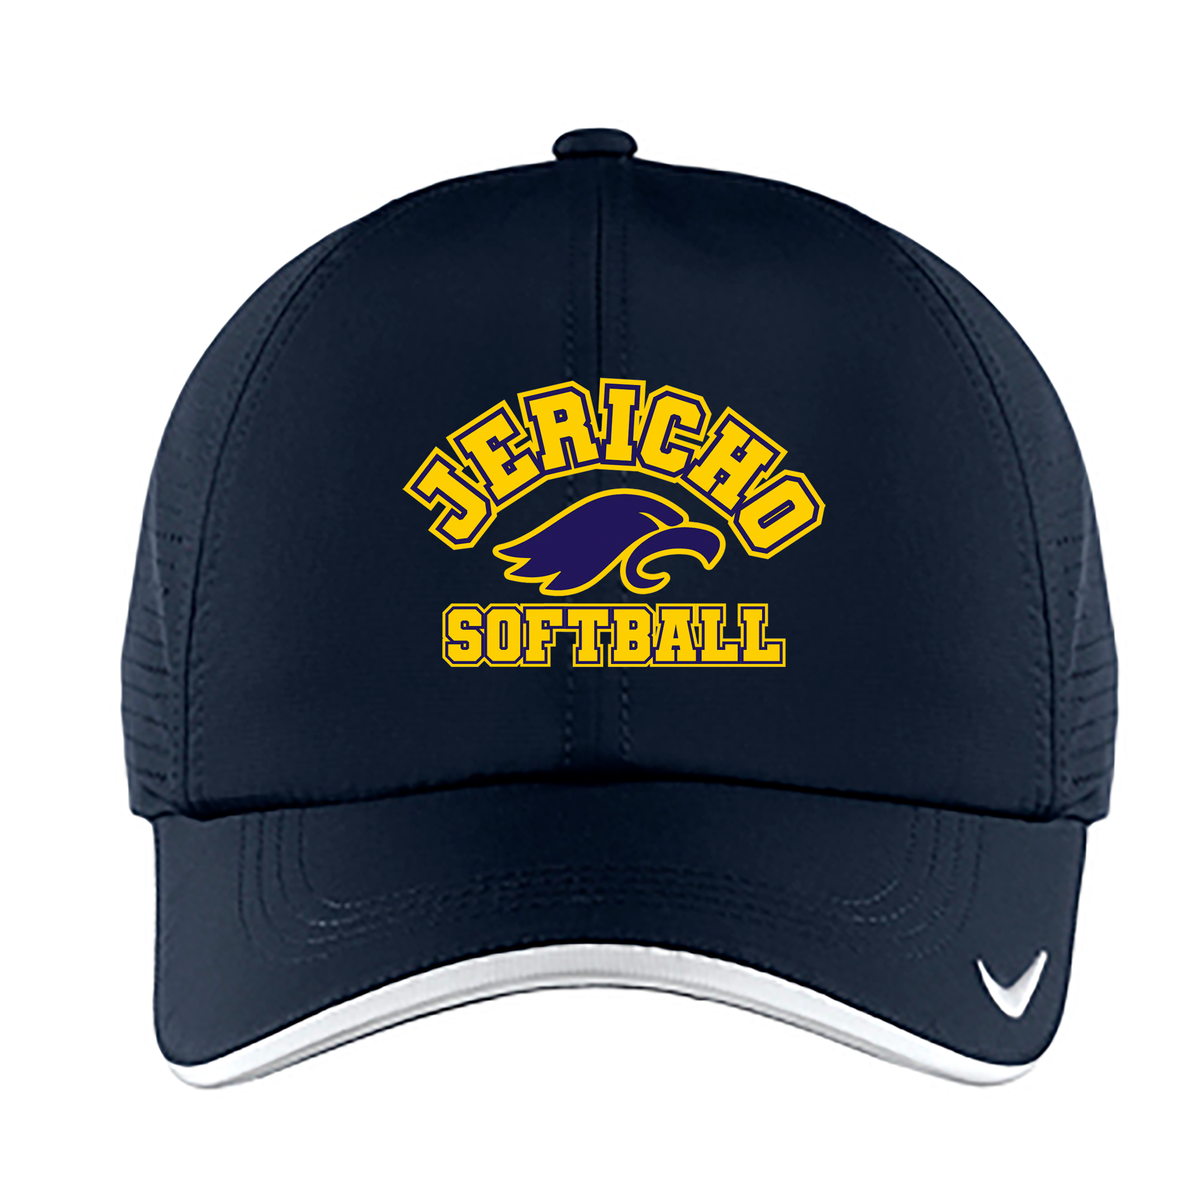 Jericho HS Softball Nike Dri-FIT Perforated Performance Cap